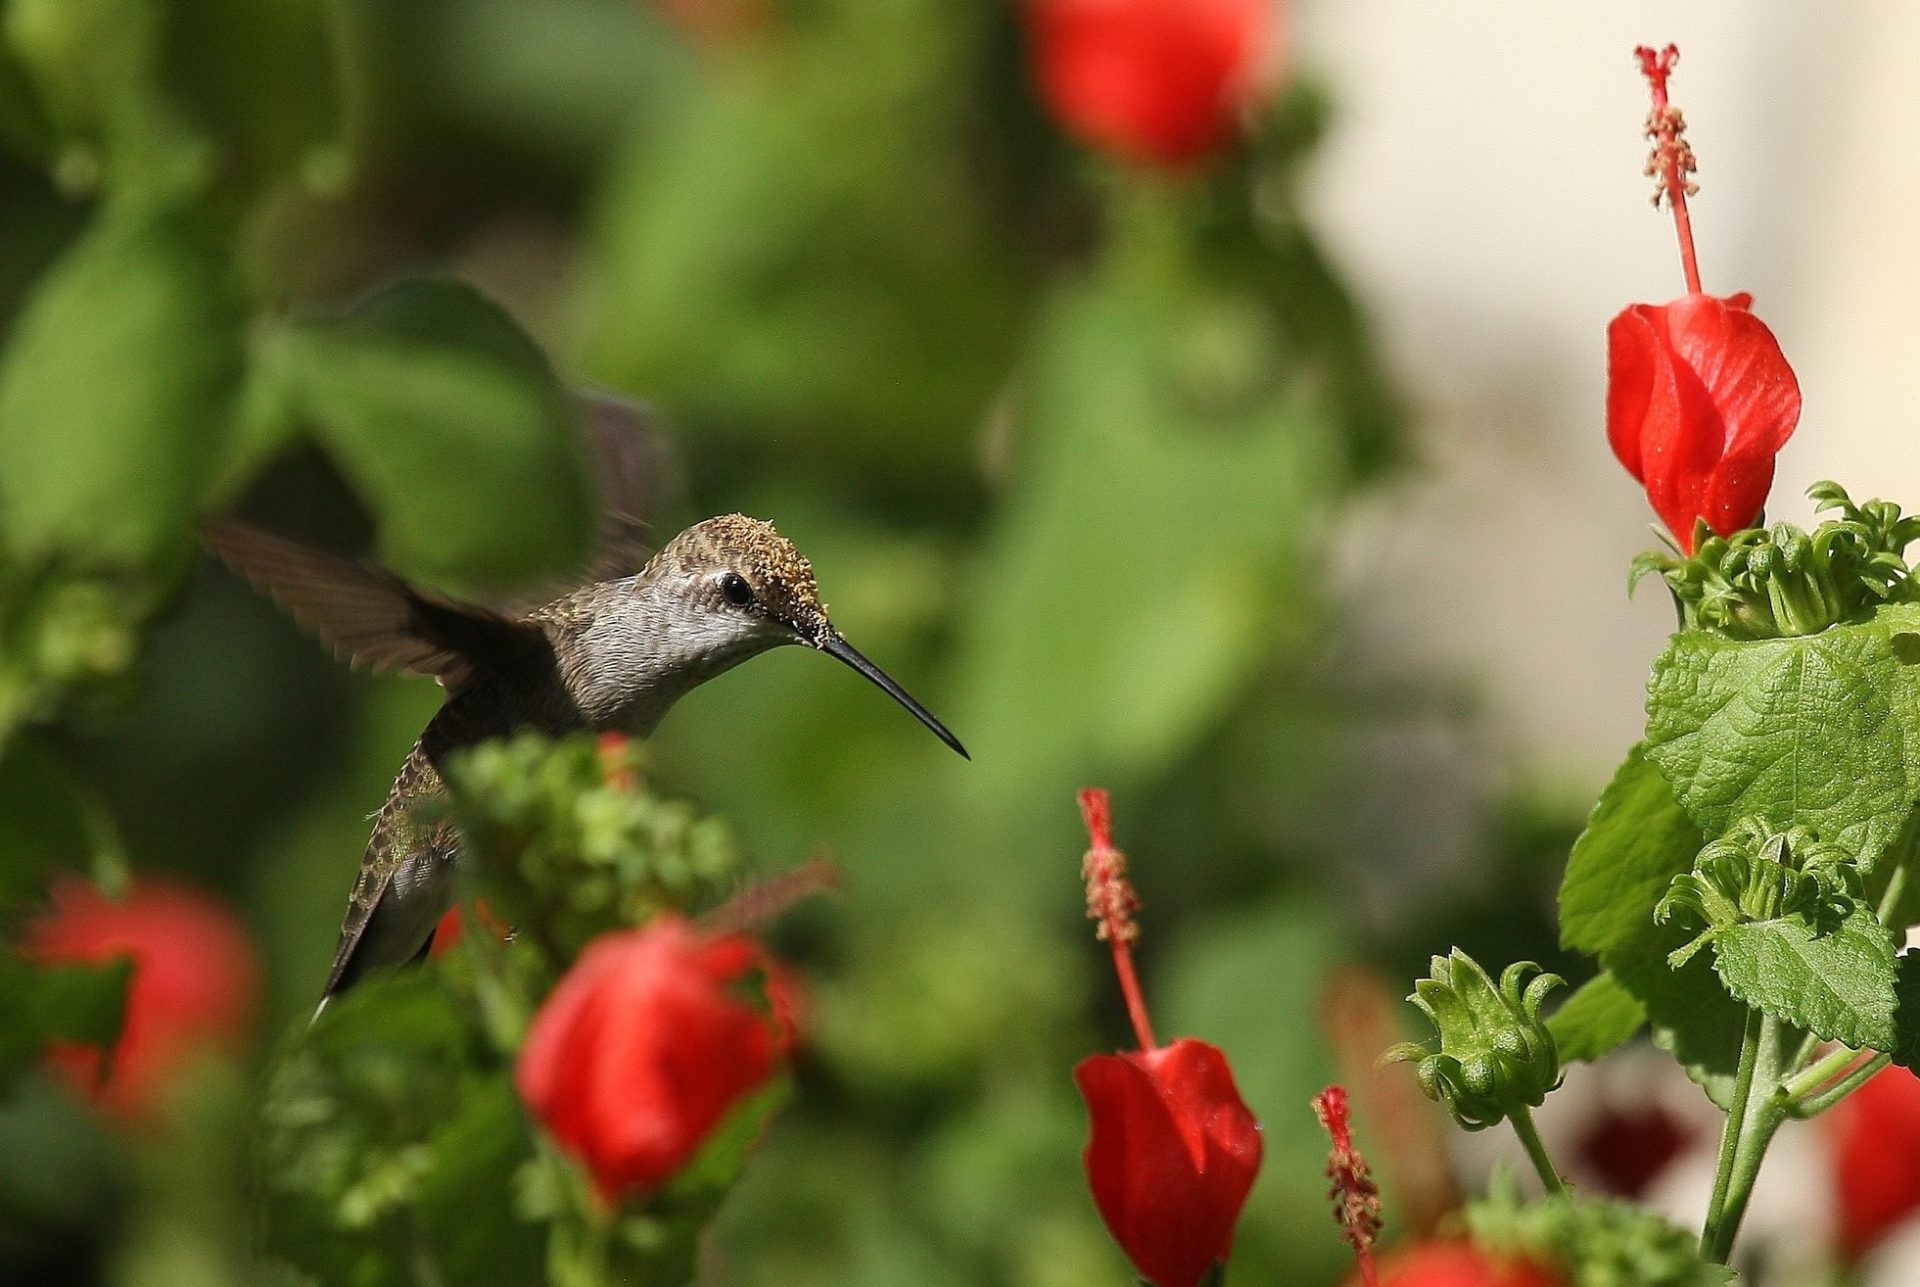 Black-Chinned Hummingbird visiting Turk's Cap flowers for nectar.